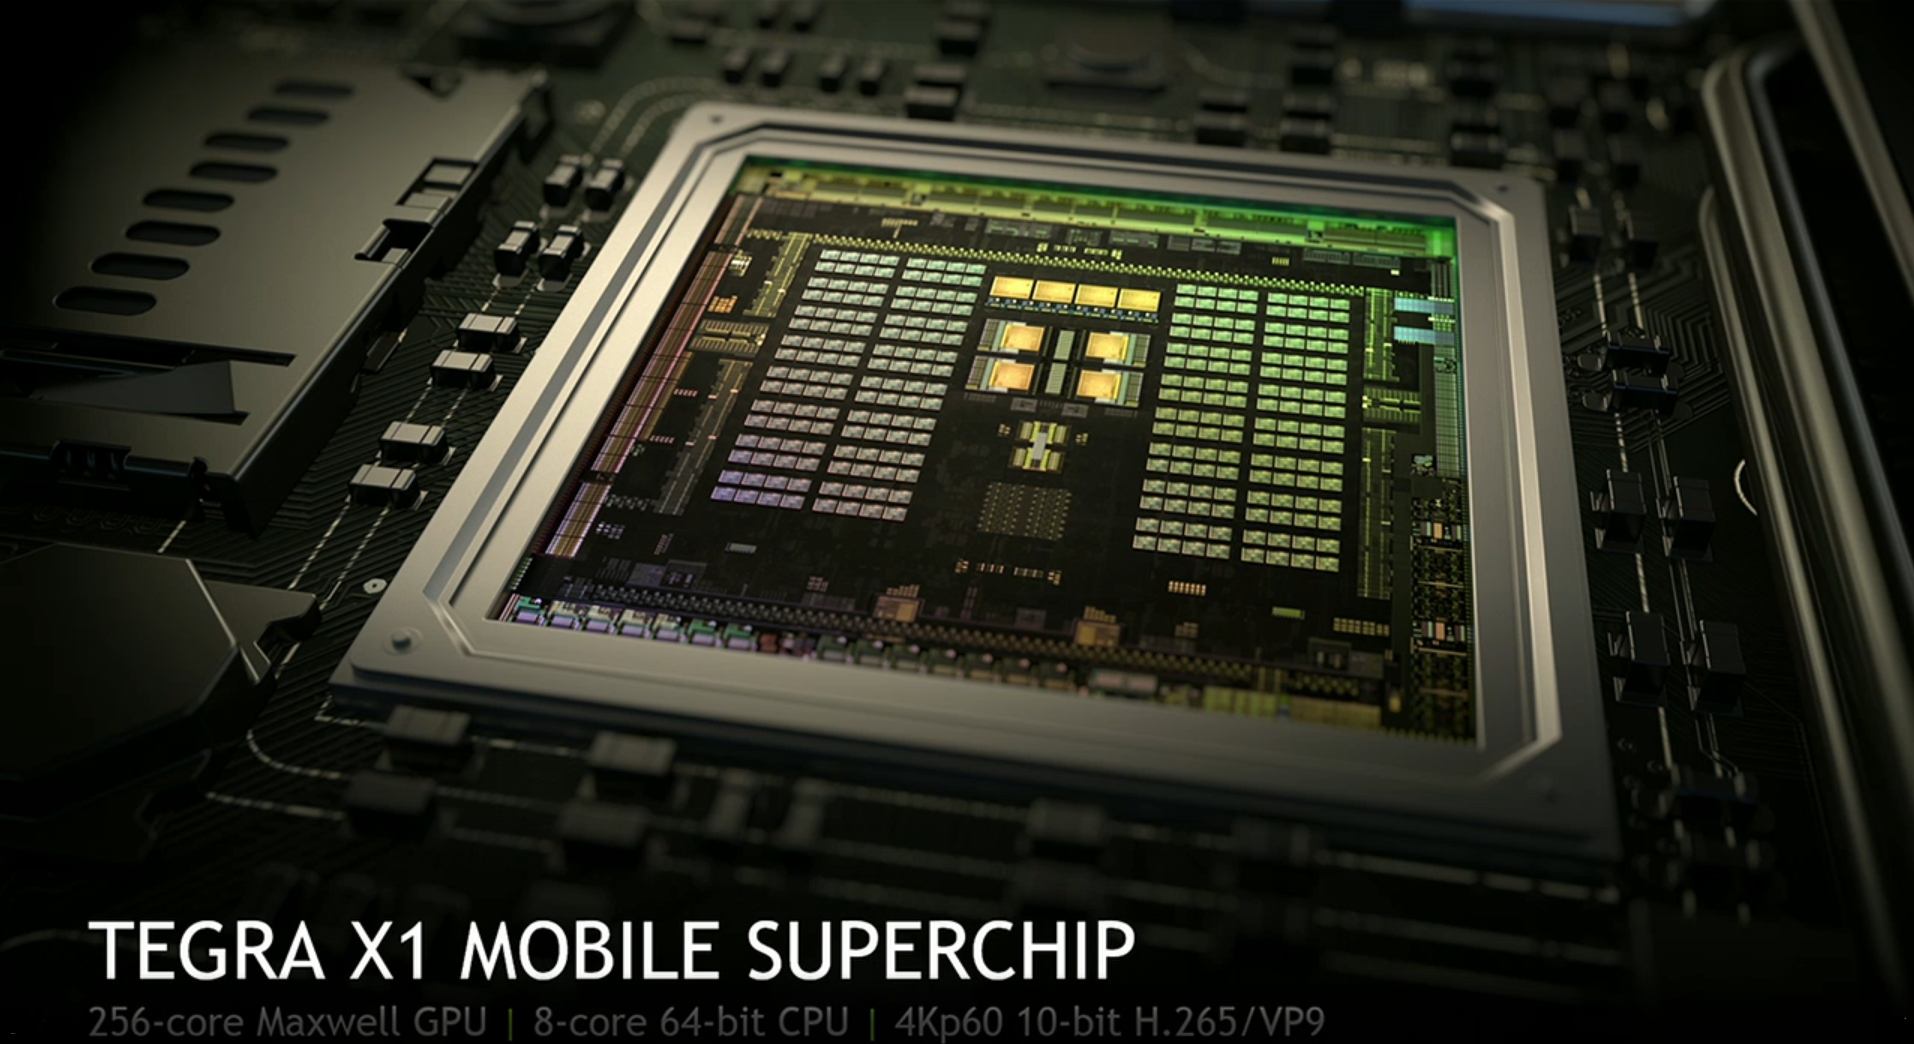 CES 2015: Nvidia Showcases Tegra X1 Mobile Superchip, Drive CX and Drive PX